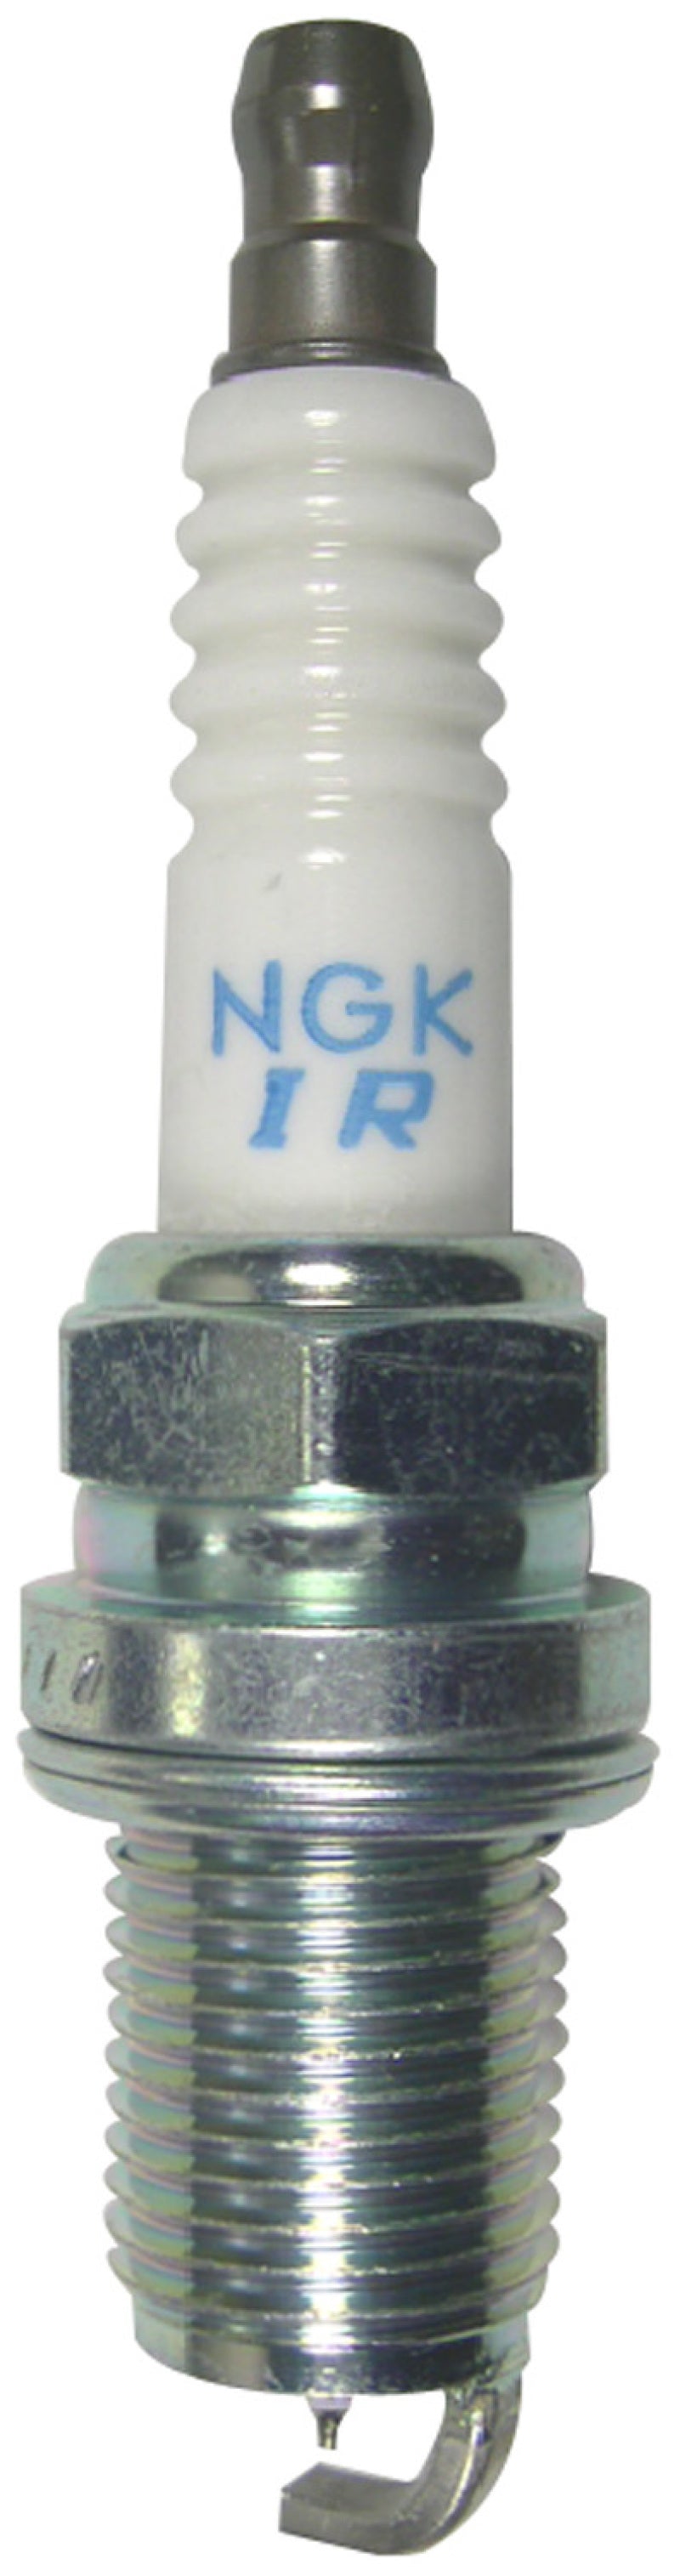 NGK Laser Iridium Spark Plug Box of 4 (IFR5L11) -  Shop now at Performance Car Parts